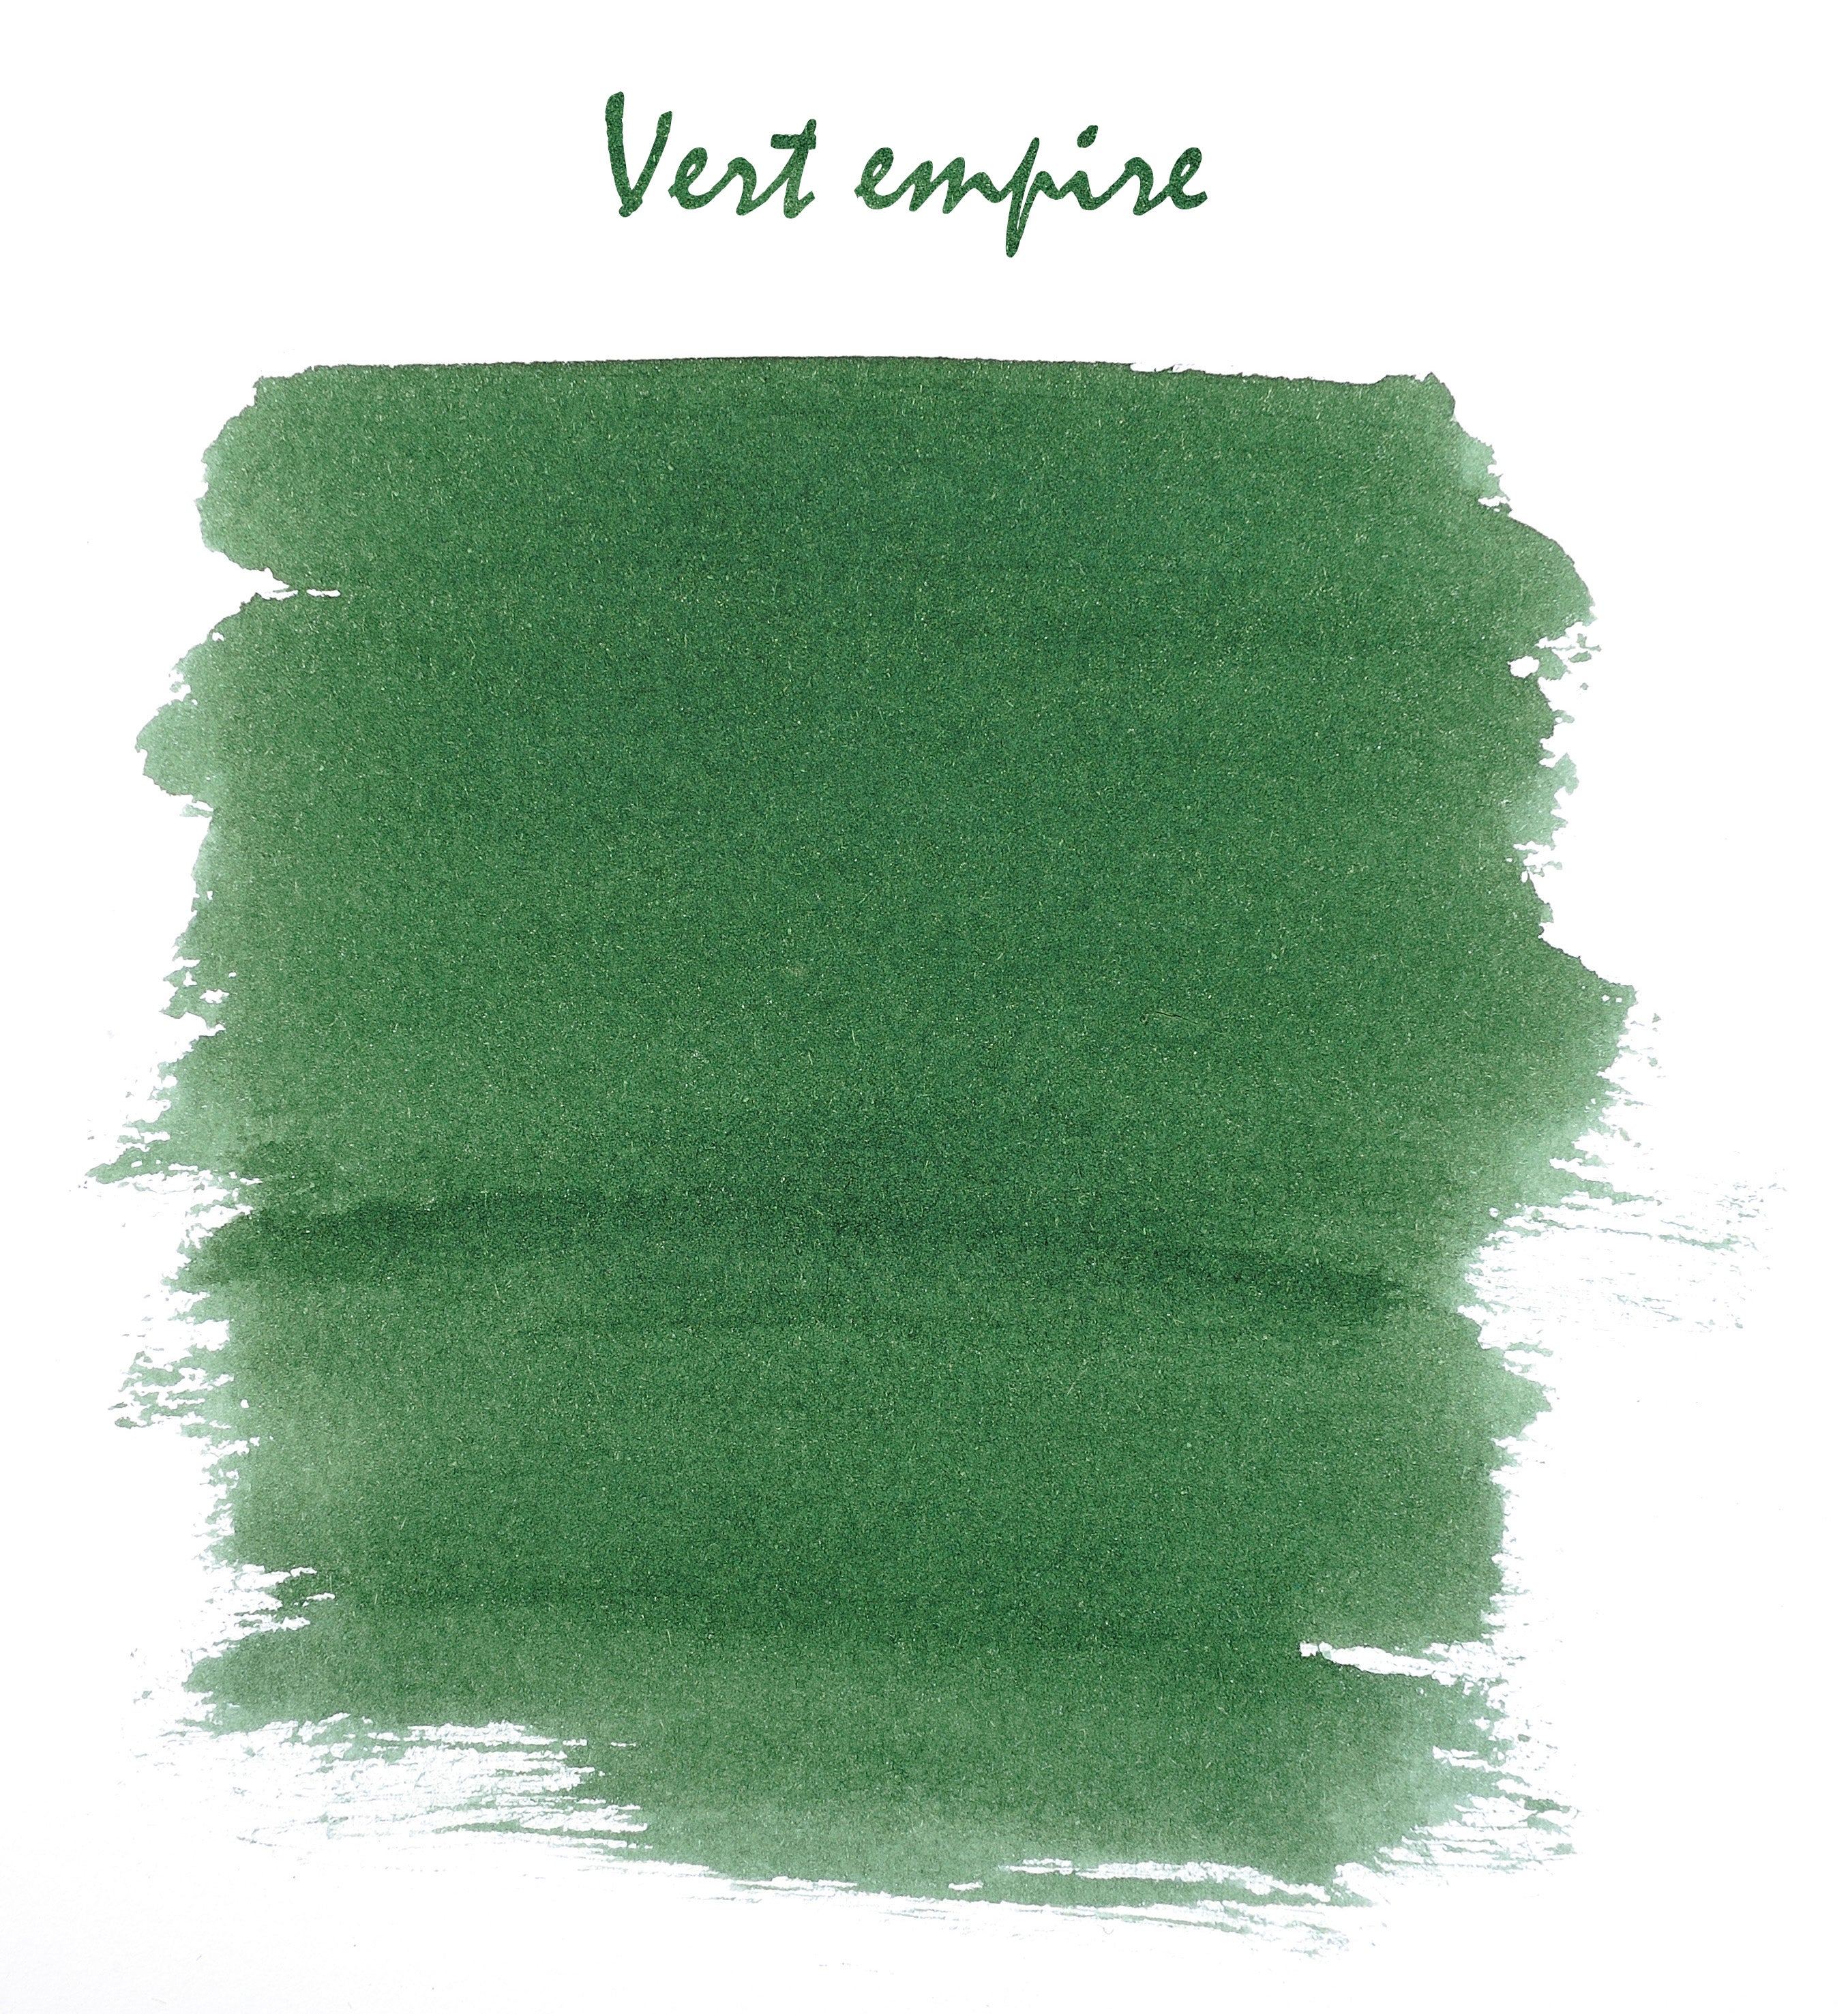 Herbin - Vert empire (lorbeergrün), 100 ml